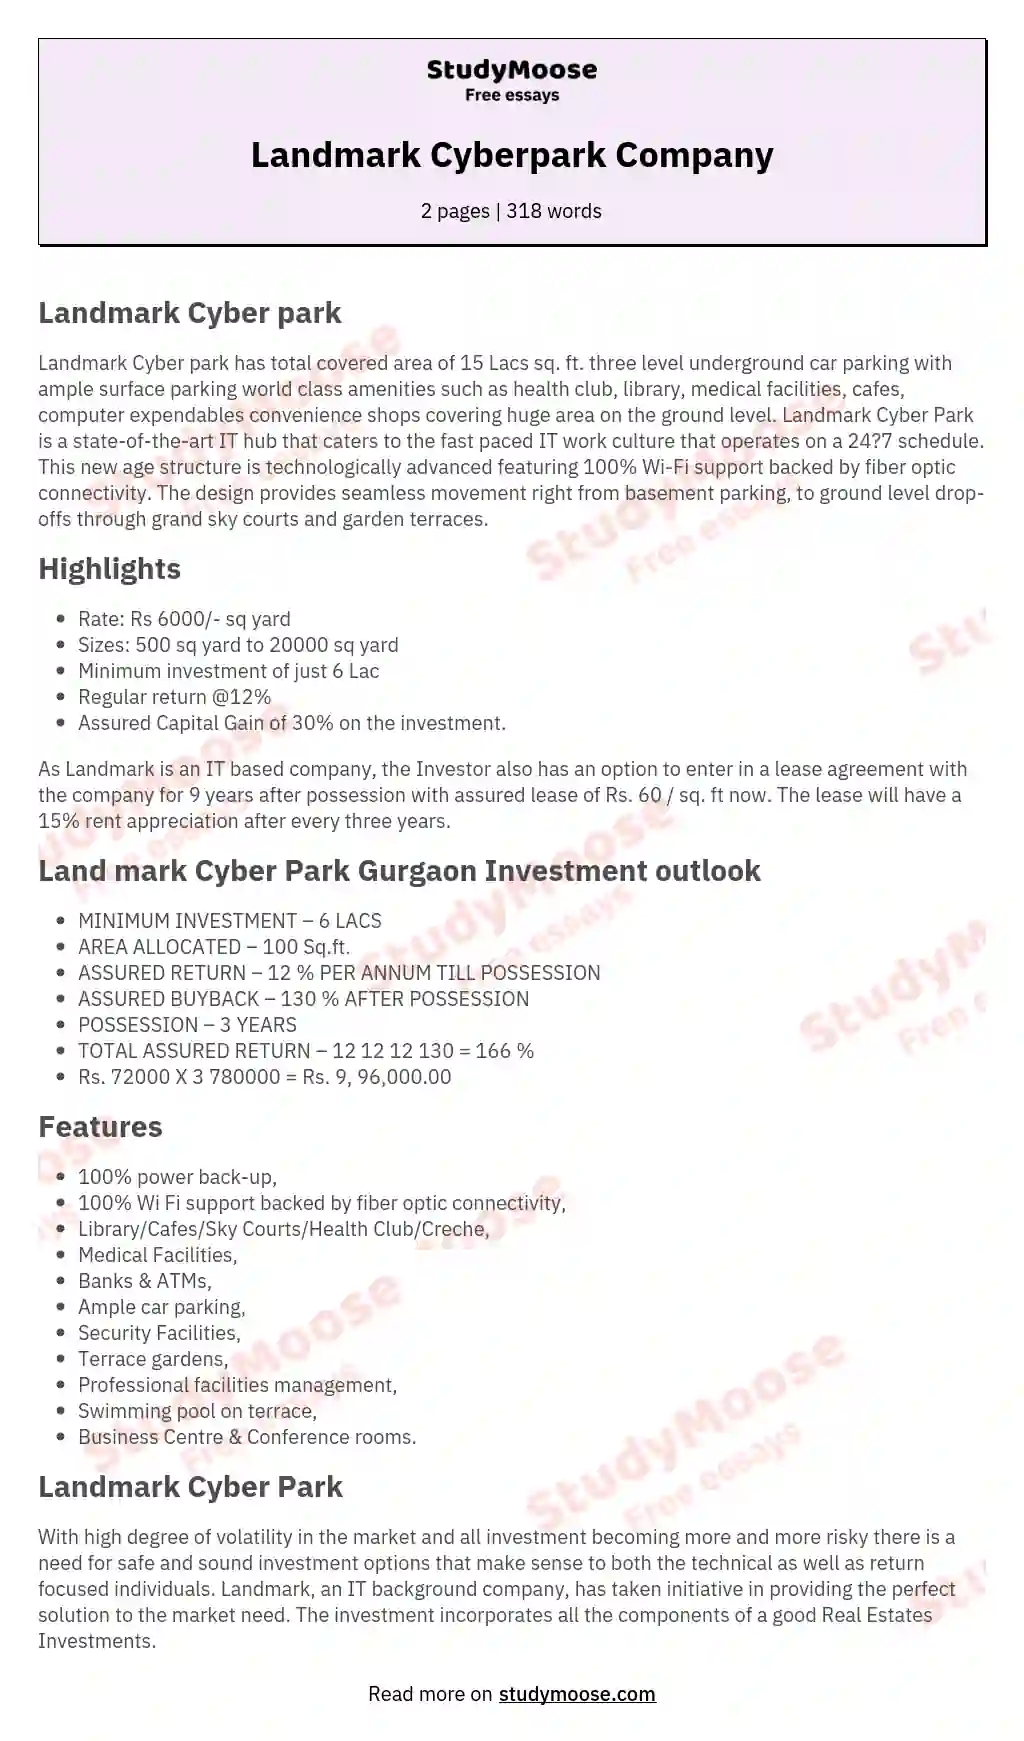 Landmark Cyberpark Company essay